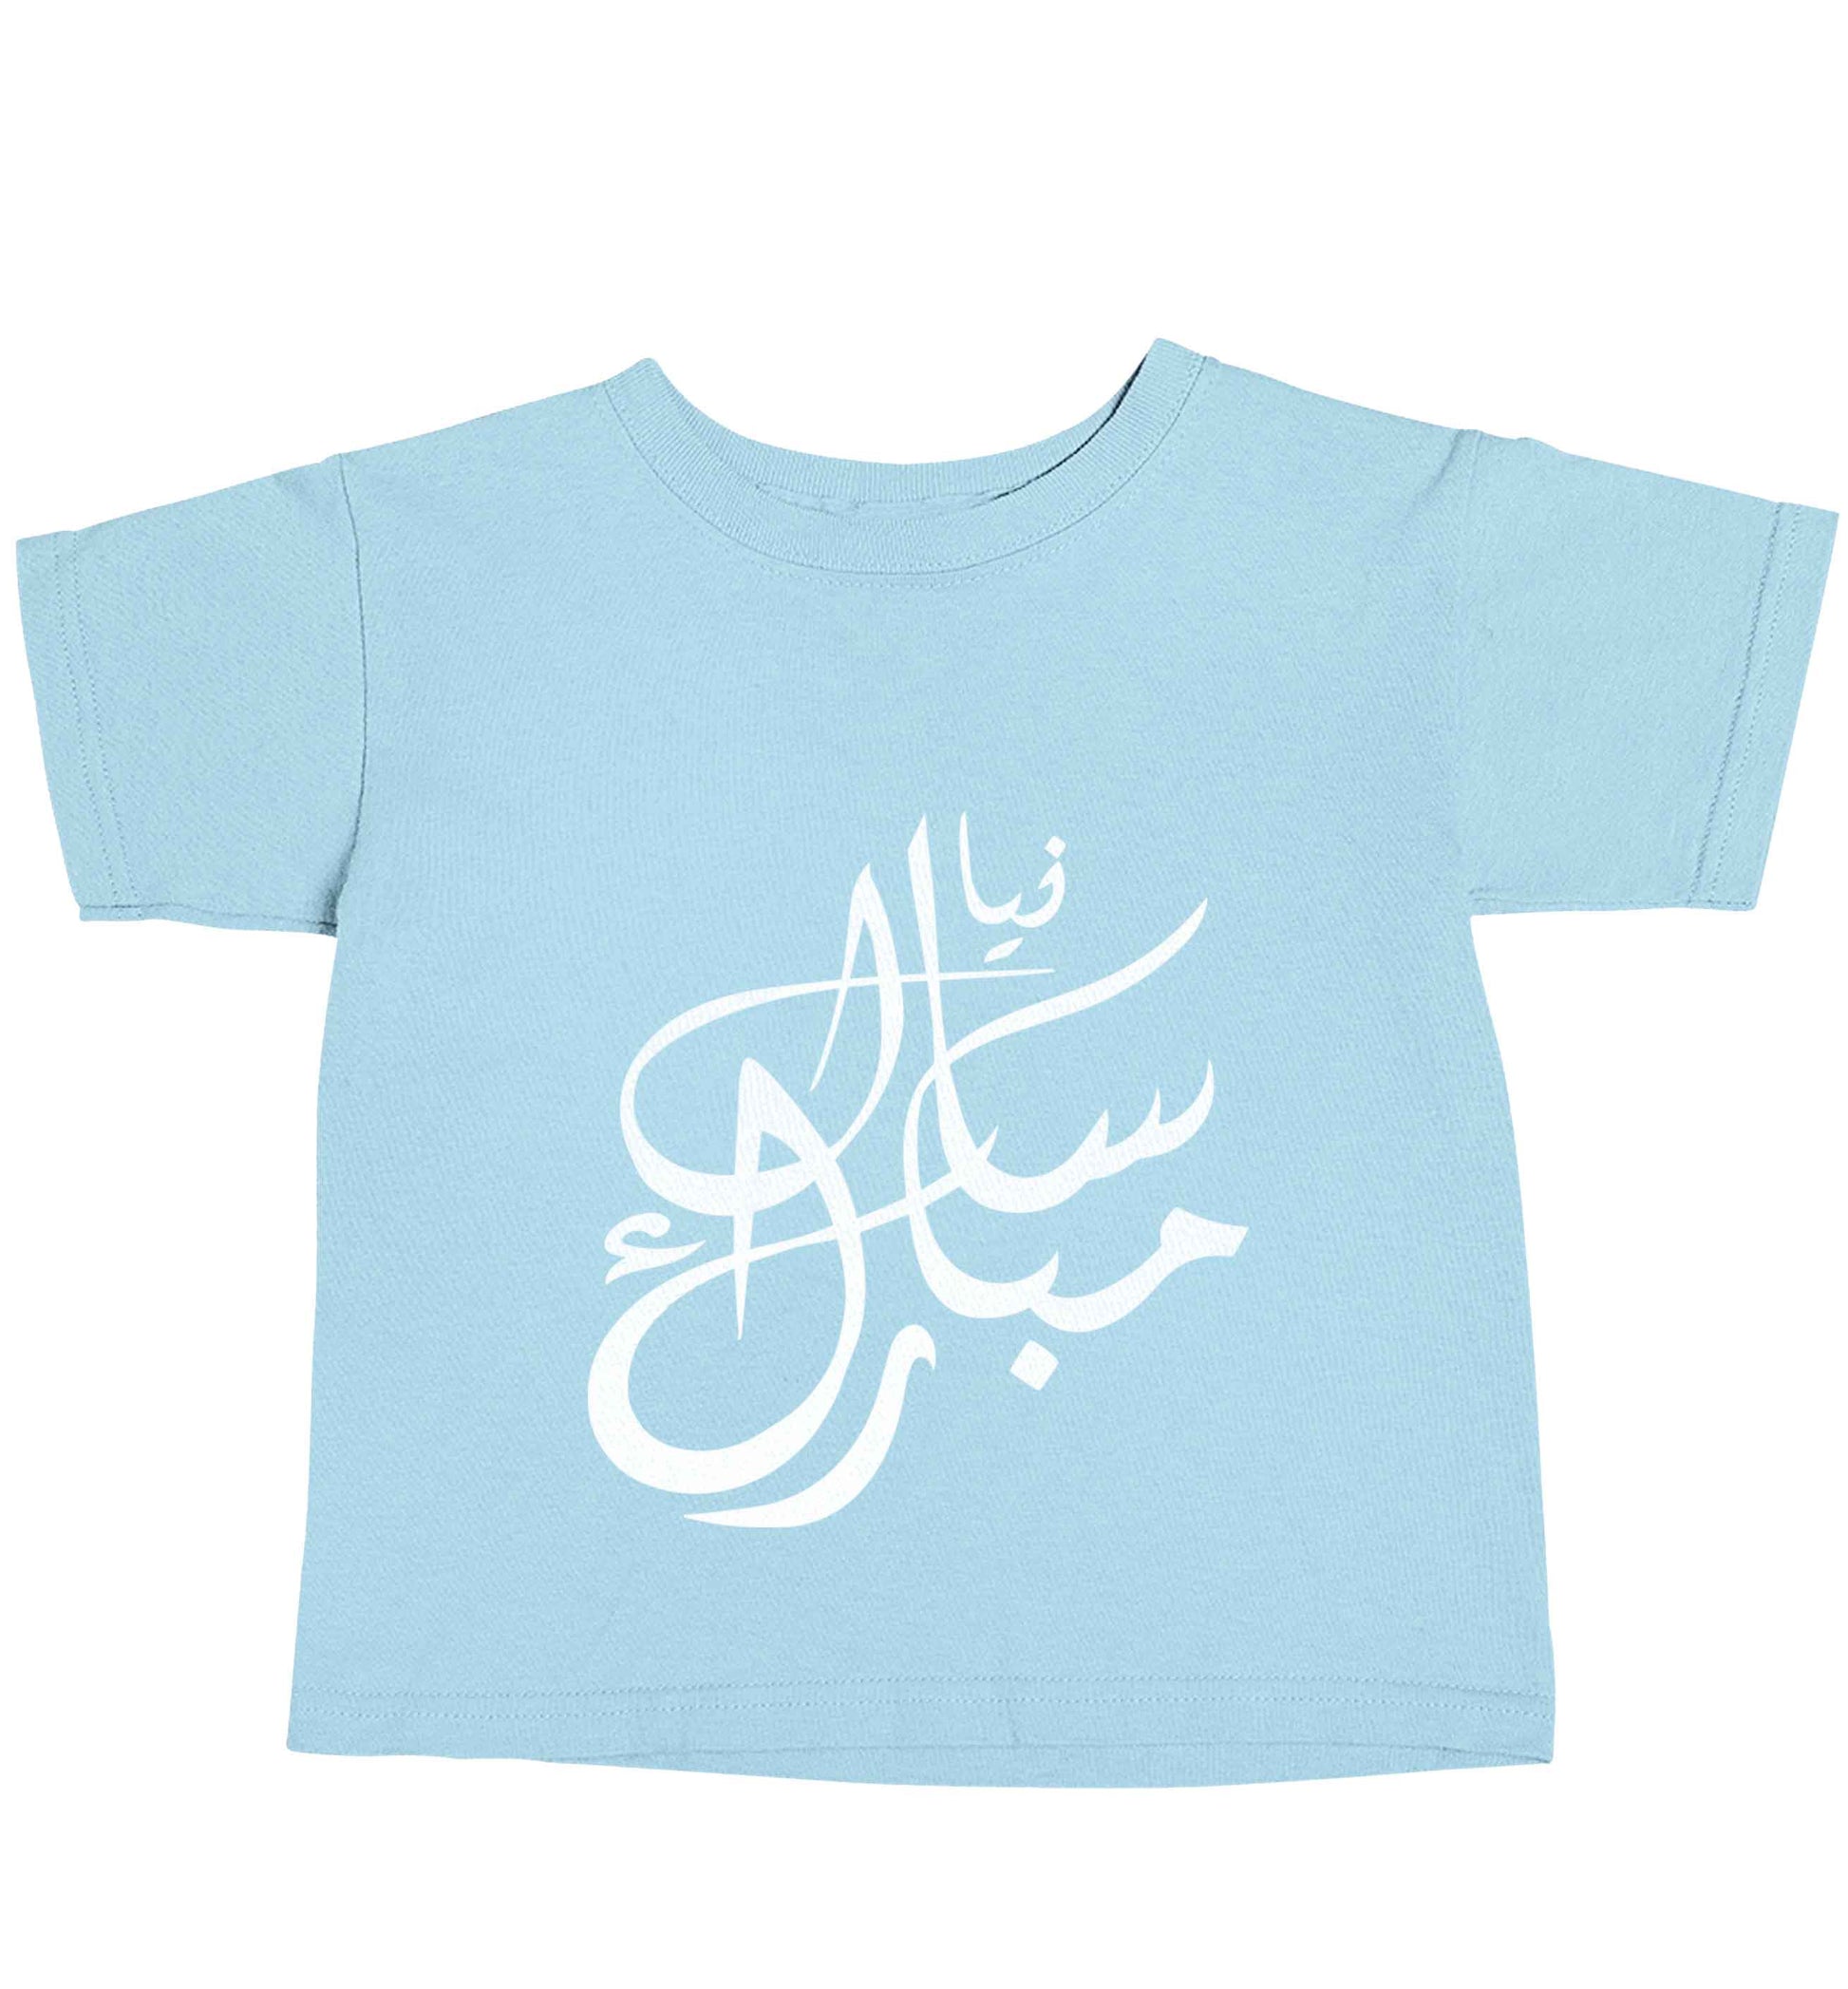 Urdu Naya saal mubarak light blue baby toddler Tshirt 2 Years